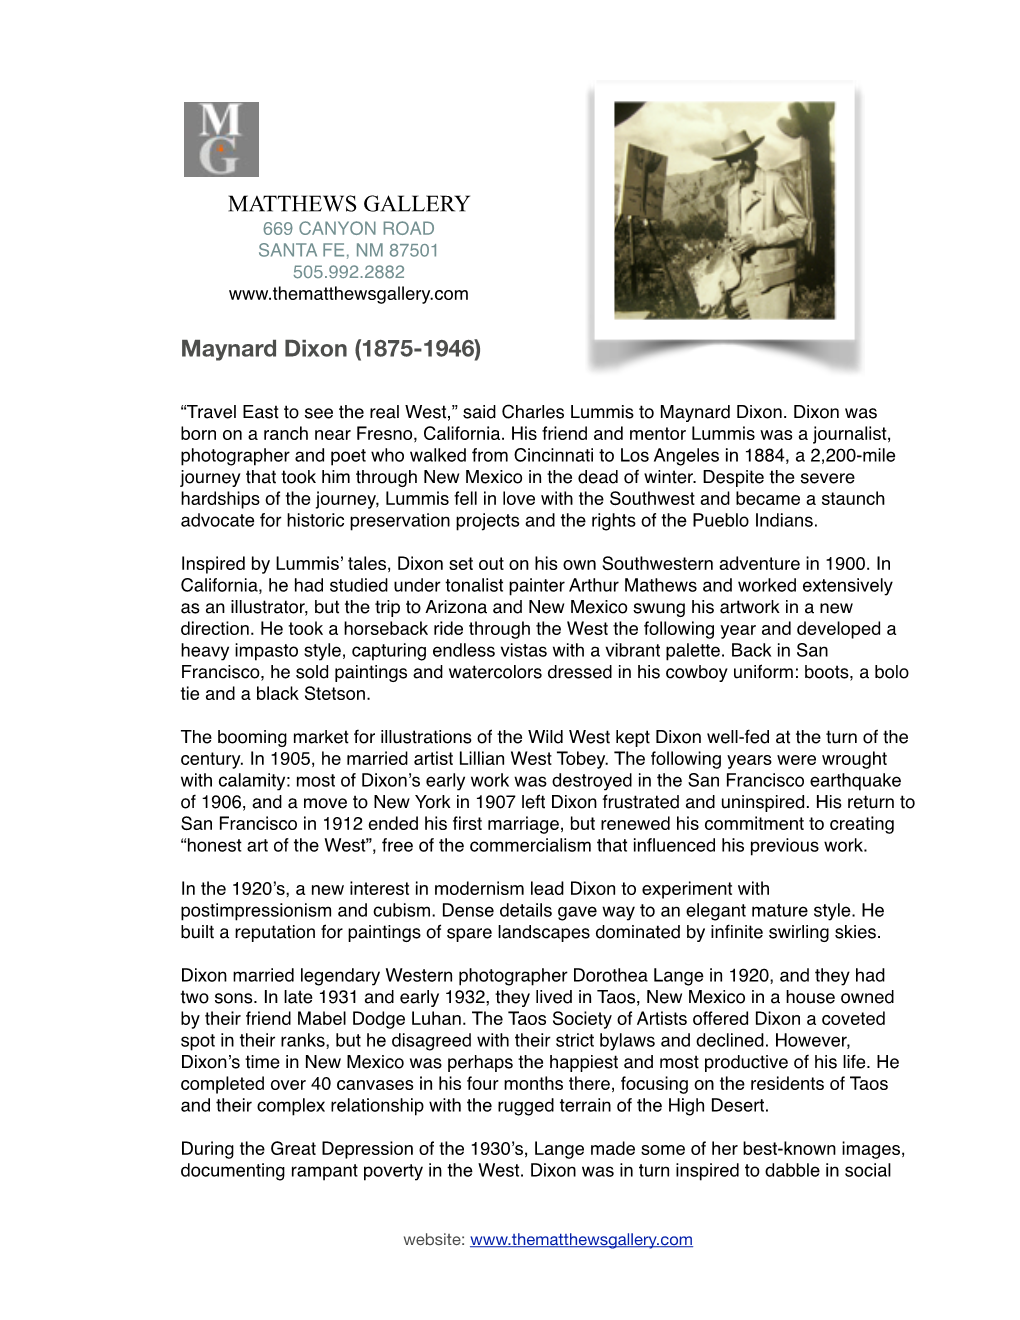 Maynar Dixon Artist Biography